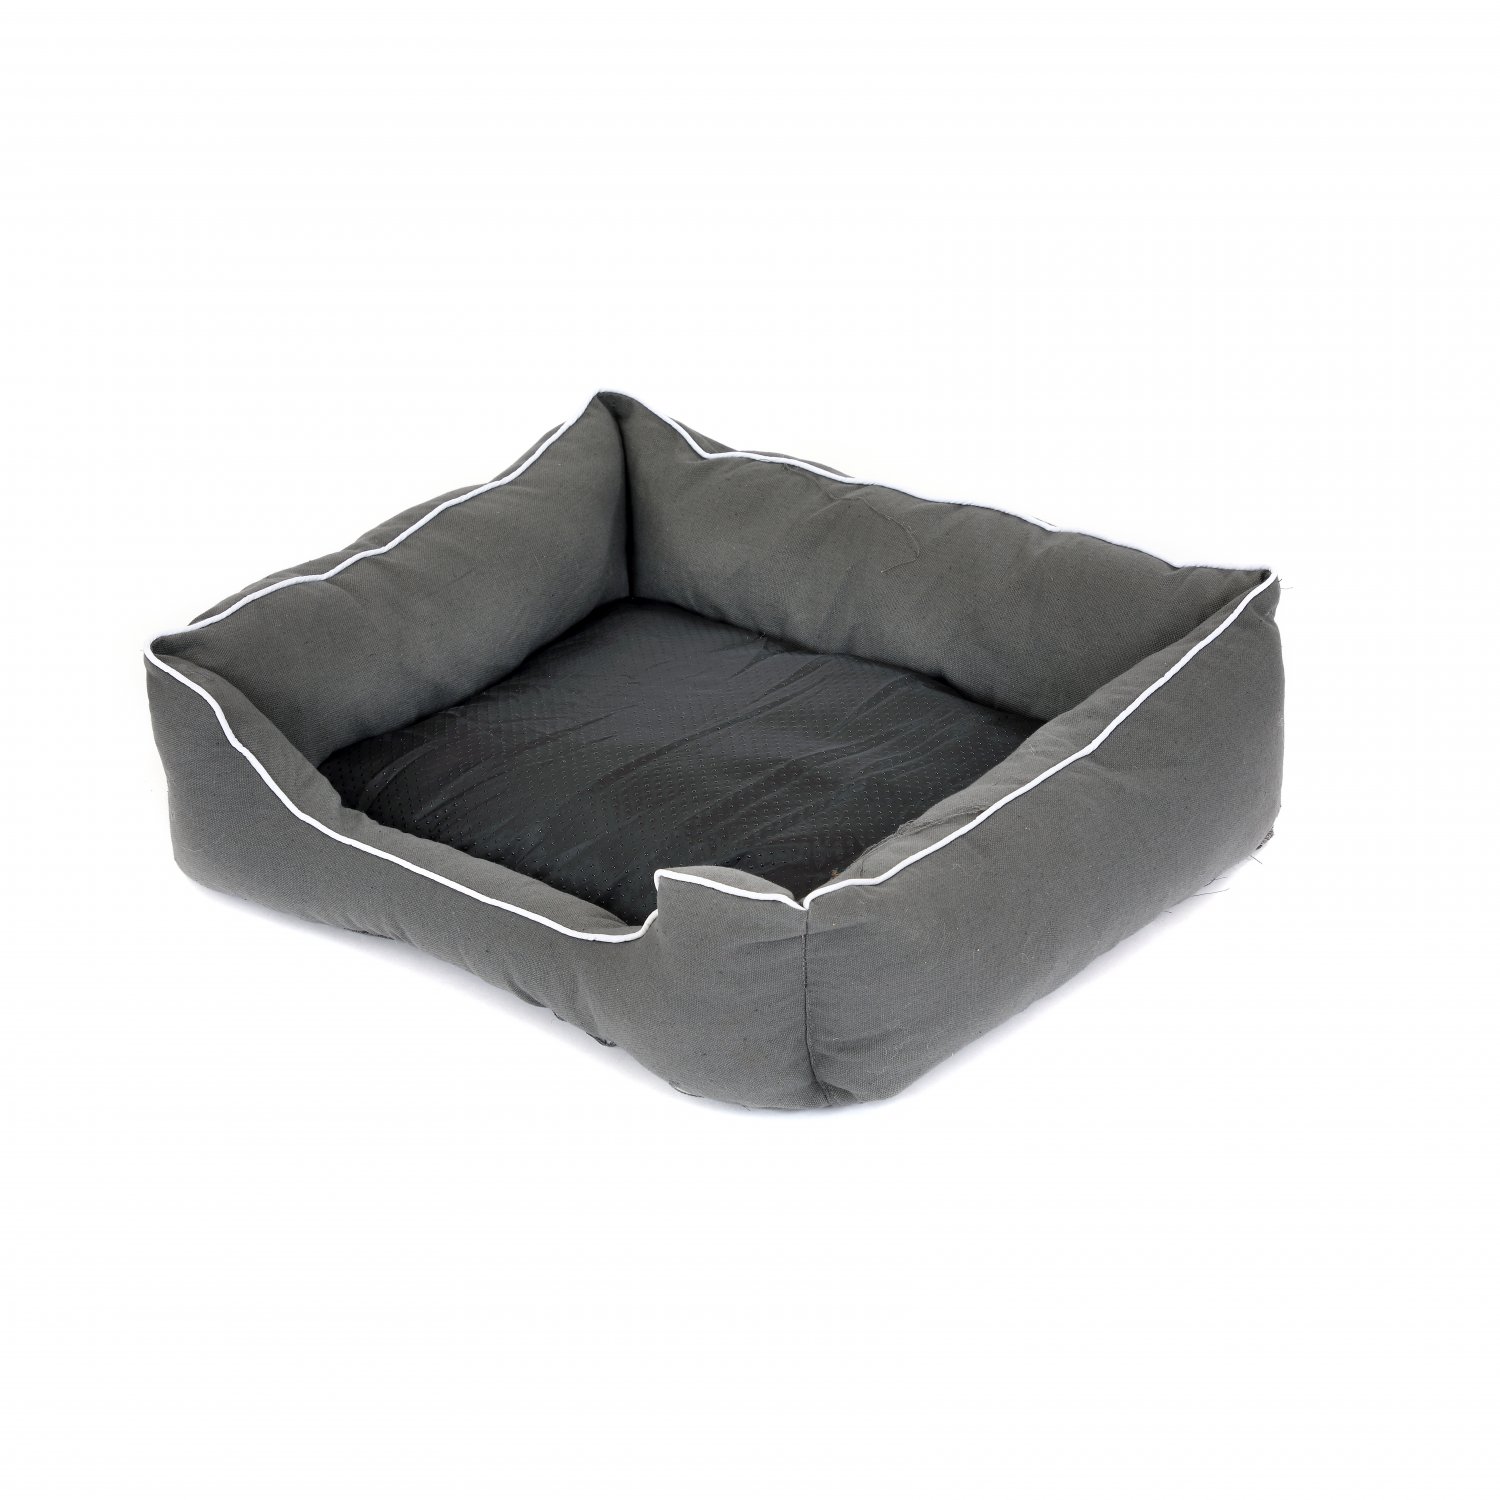 Deluxe Plush Soft Moisture Proof Medium Dog Bed Basket 50x60cm